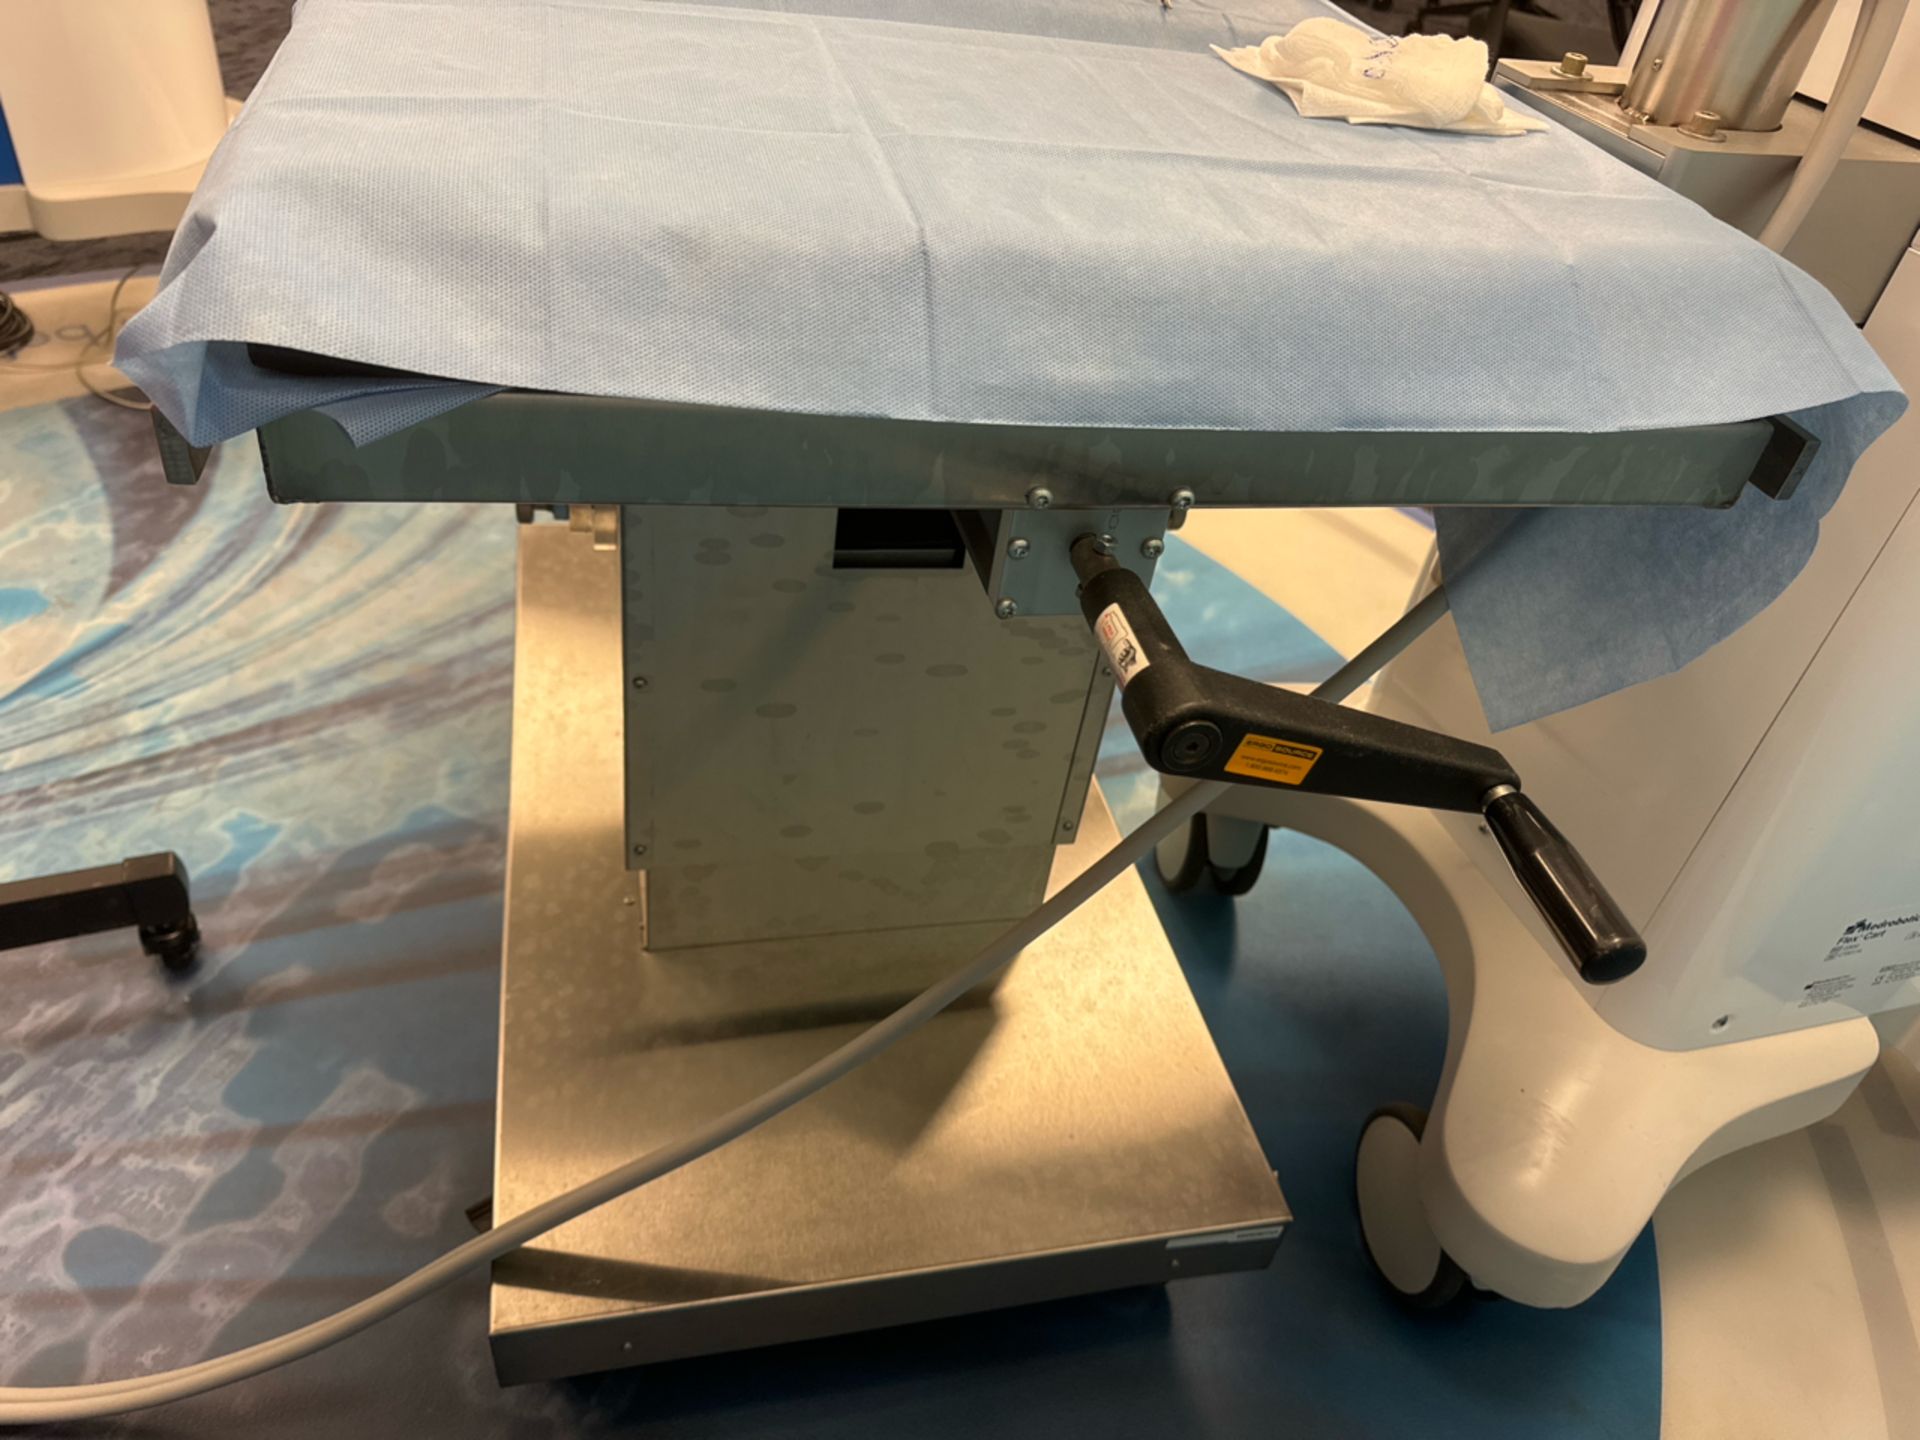 Medrobotics Adjustable Surgical Table - Image 2 of 3